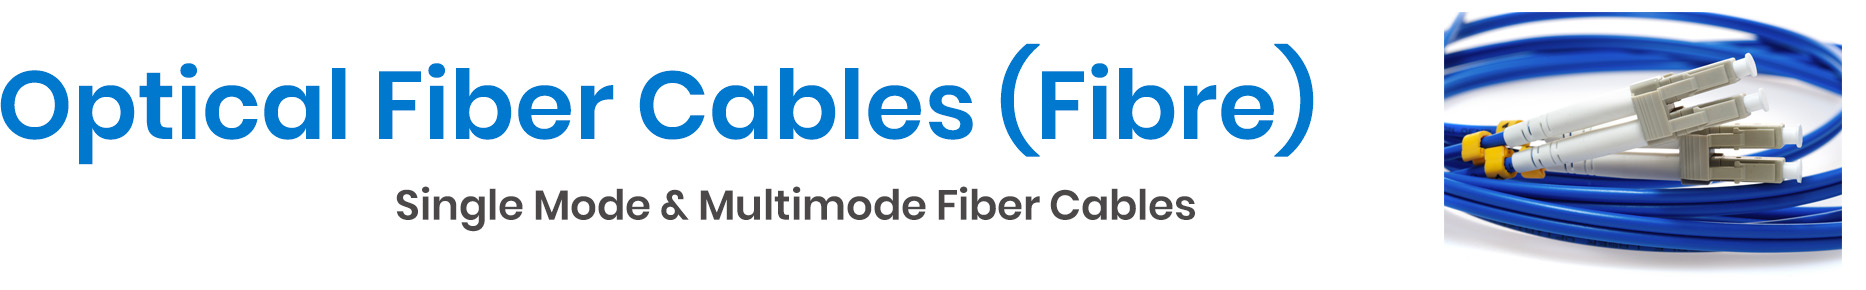 Optical Fiber Cable - Fiber Optic Cable Types